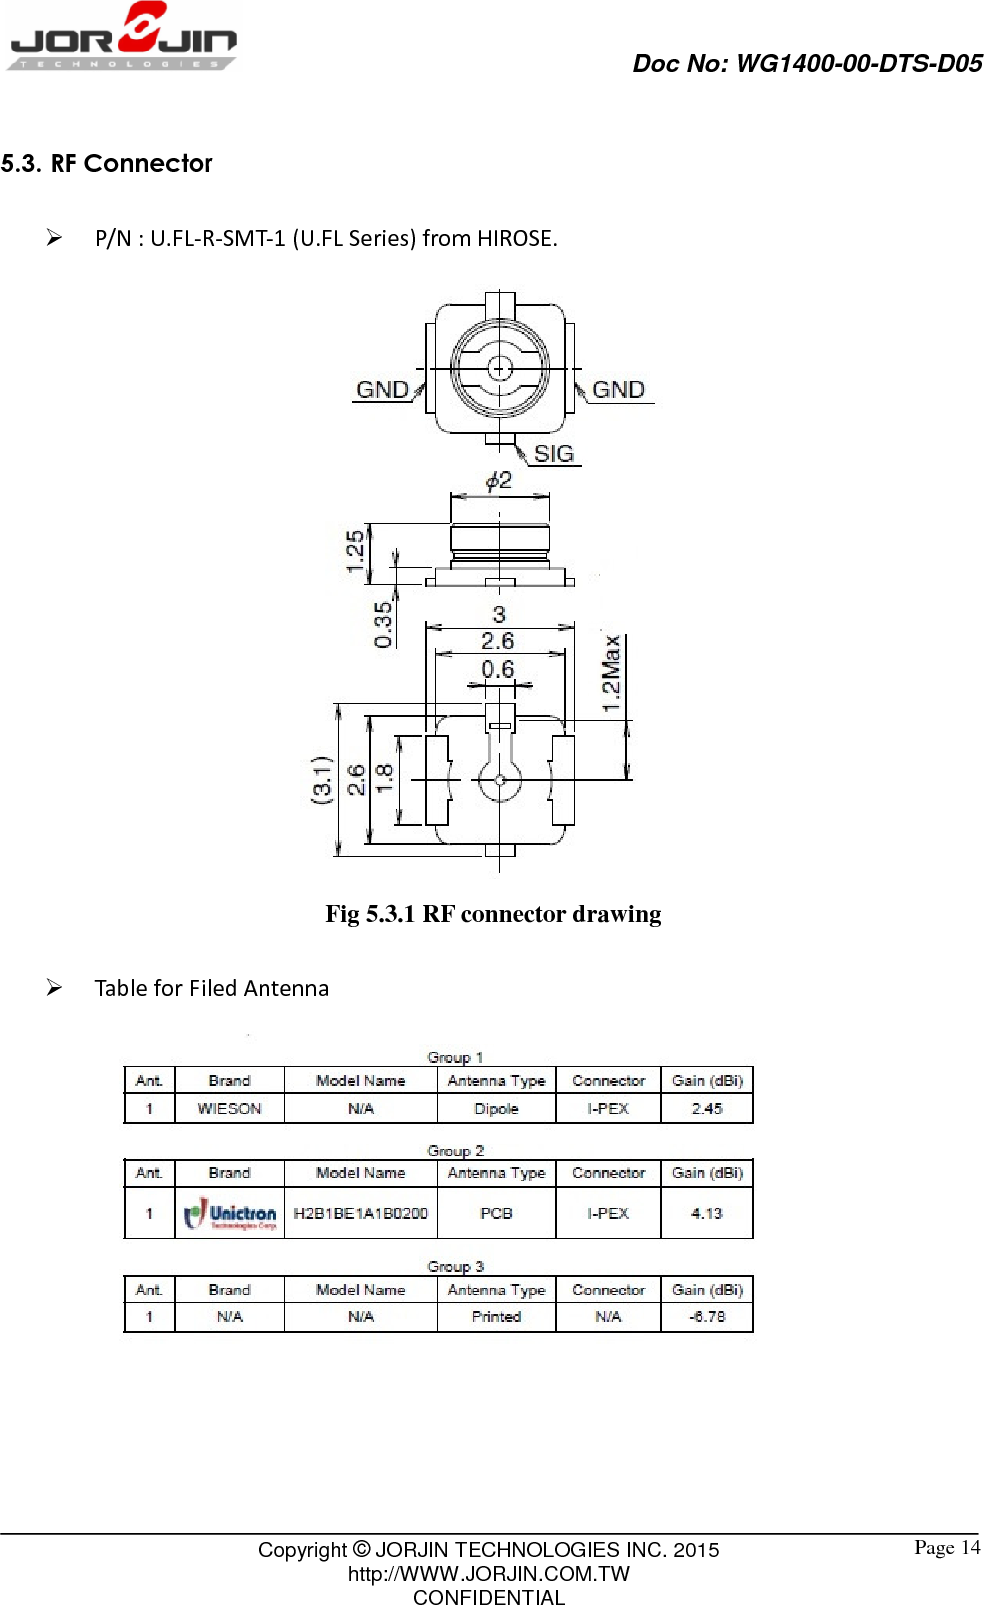                                Doc No: WG1400-00-DTS-D05                                                                                                 Copyright © JORJIN TECHNOLOGIES INC. 2015 http://WWW.JORJIN.COM.TW CONFIDENTIAL  Page 14 5.3. RF Connector  P/N : U.FL-R-SMT-1 (U.FL Series) from HIROSE.                            Fig 5.3.1 RF connector drawing         Table for Filed Antenna     